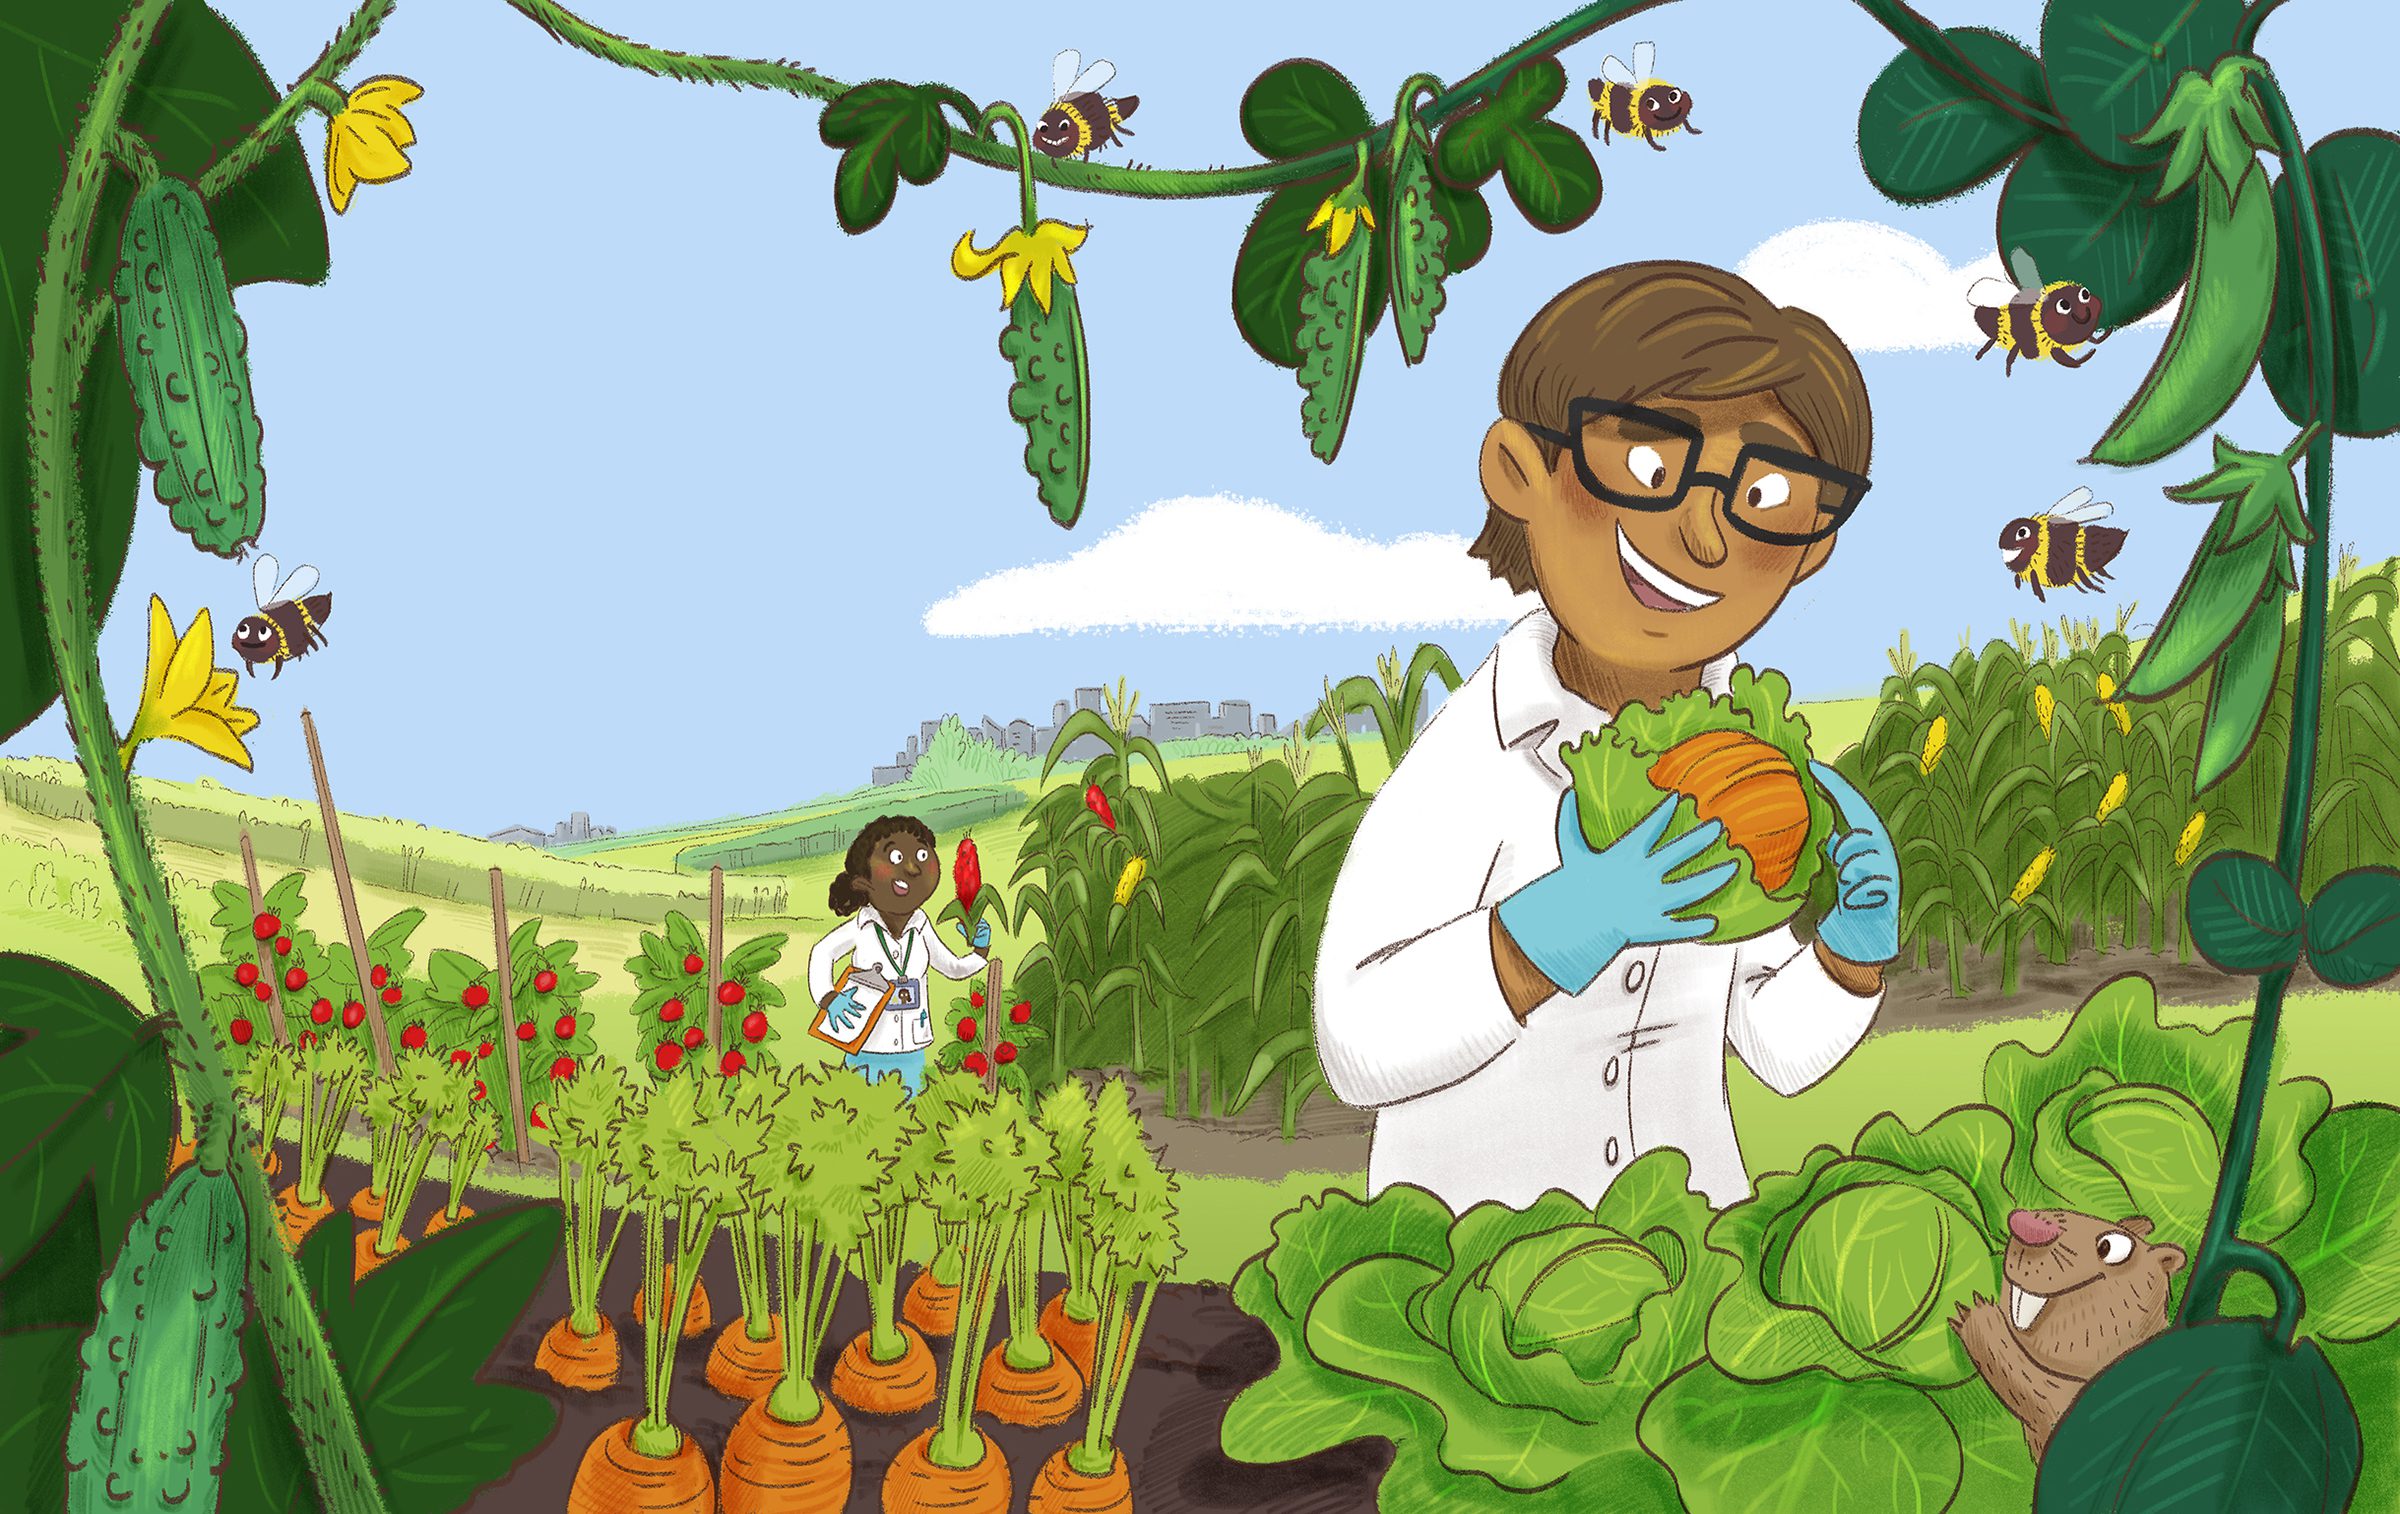 ottawa farm vegetables and scientists illustration